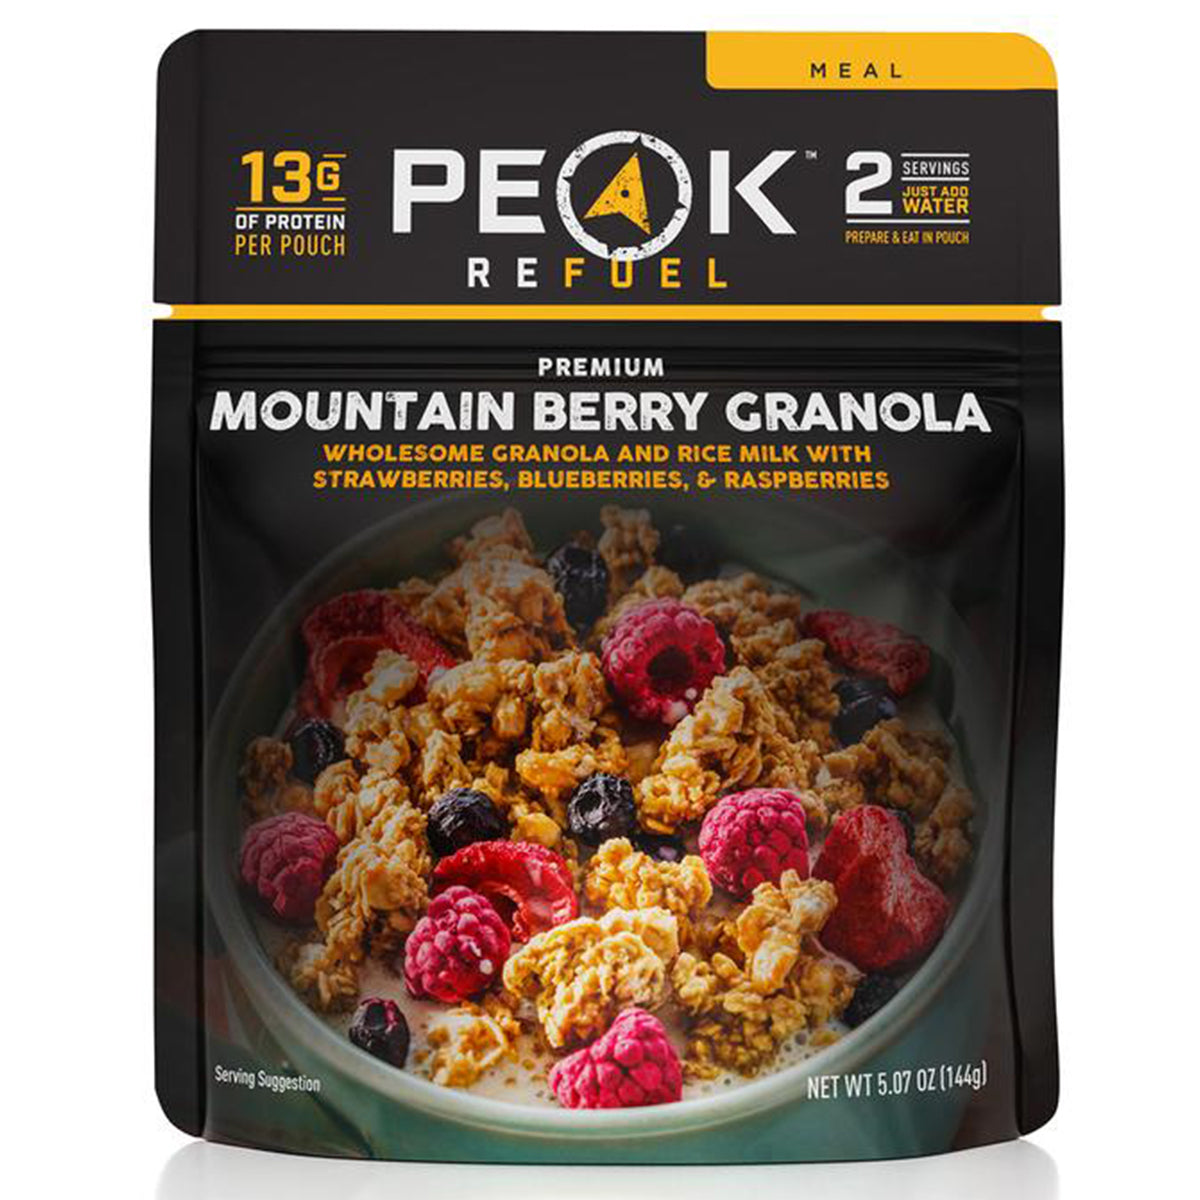 Peak Refuel Mountain Berry Granola in Peak Refuel Mountain Berry Granola by Peak Refuel | Camping - goHUNT Shop by GOHUNT | Peak Refuel - GOHUNT Shop